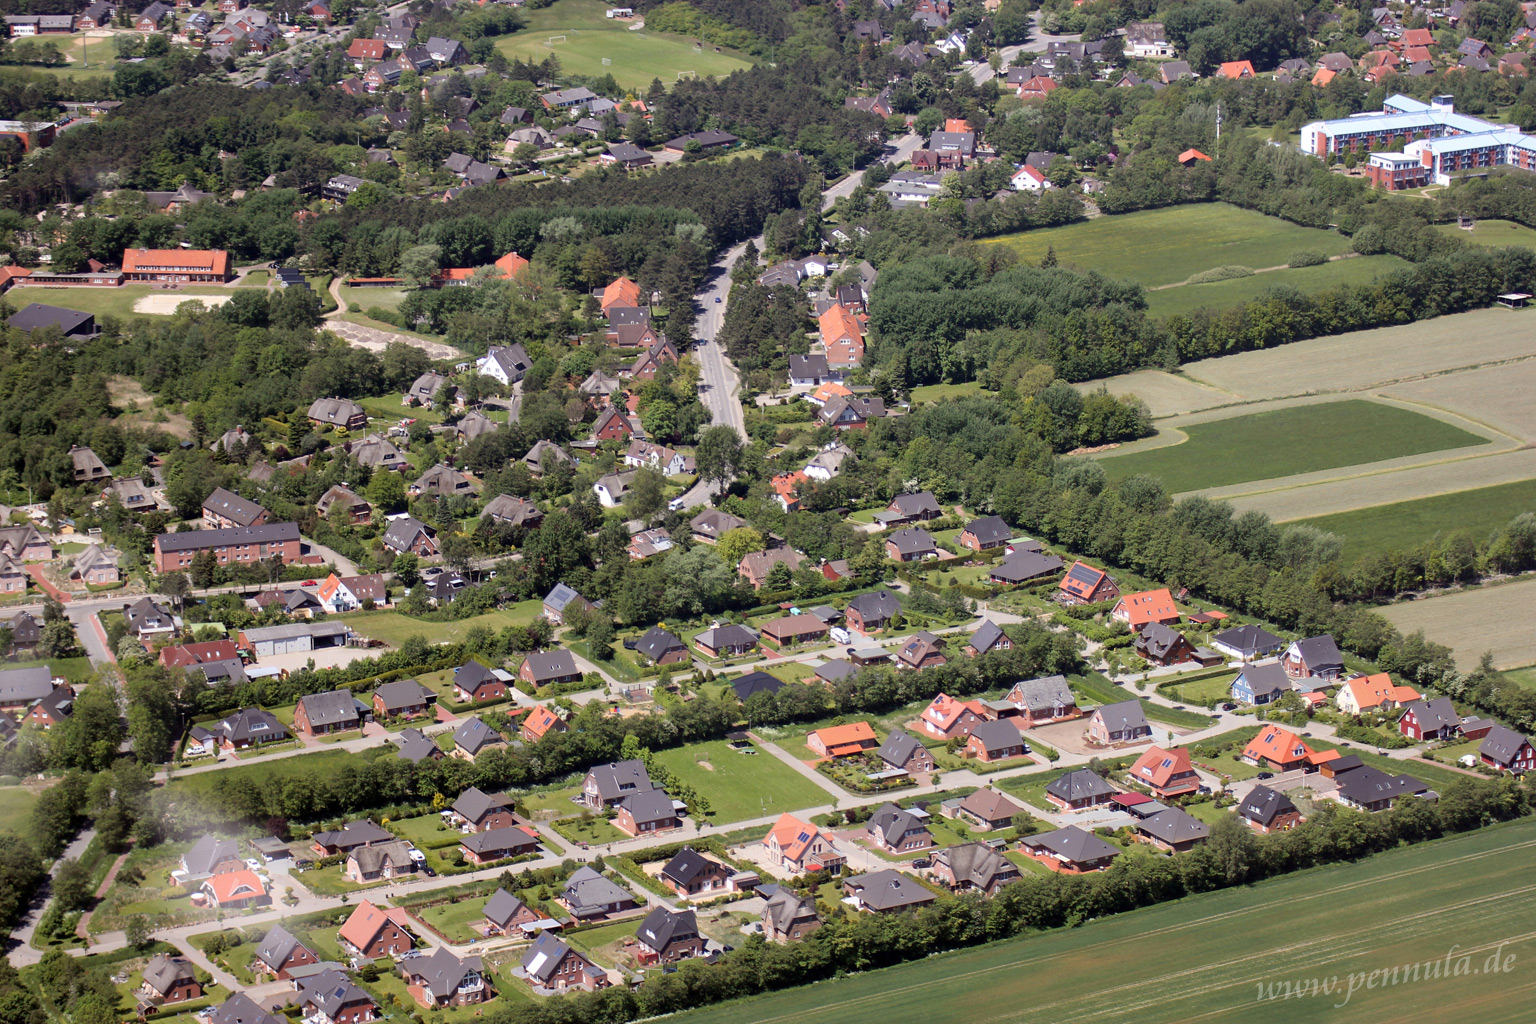 Ferienhäuser an der Böhler Landstraße, am Böhler Weg sowie an der Osterleye in Sankt Peter Ording